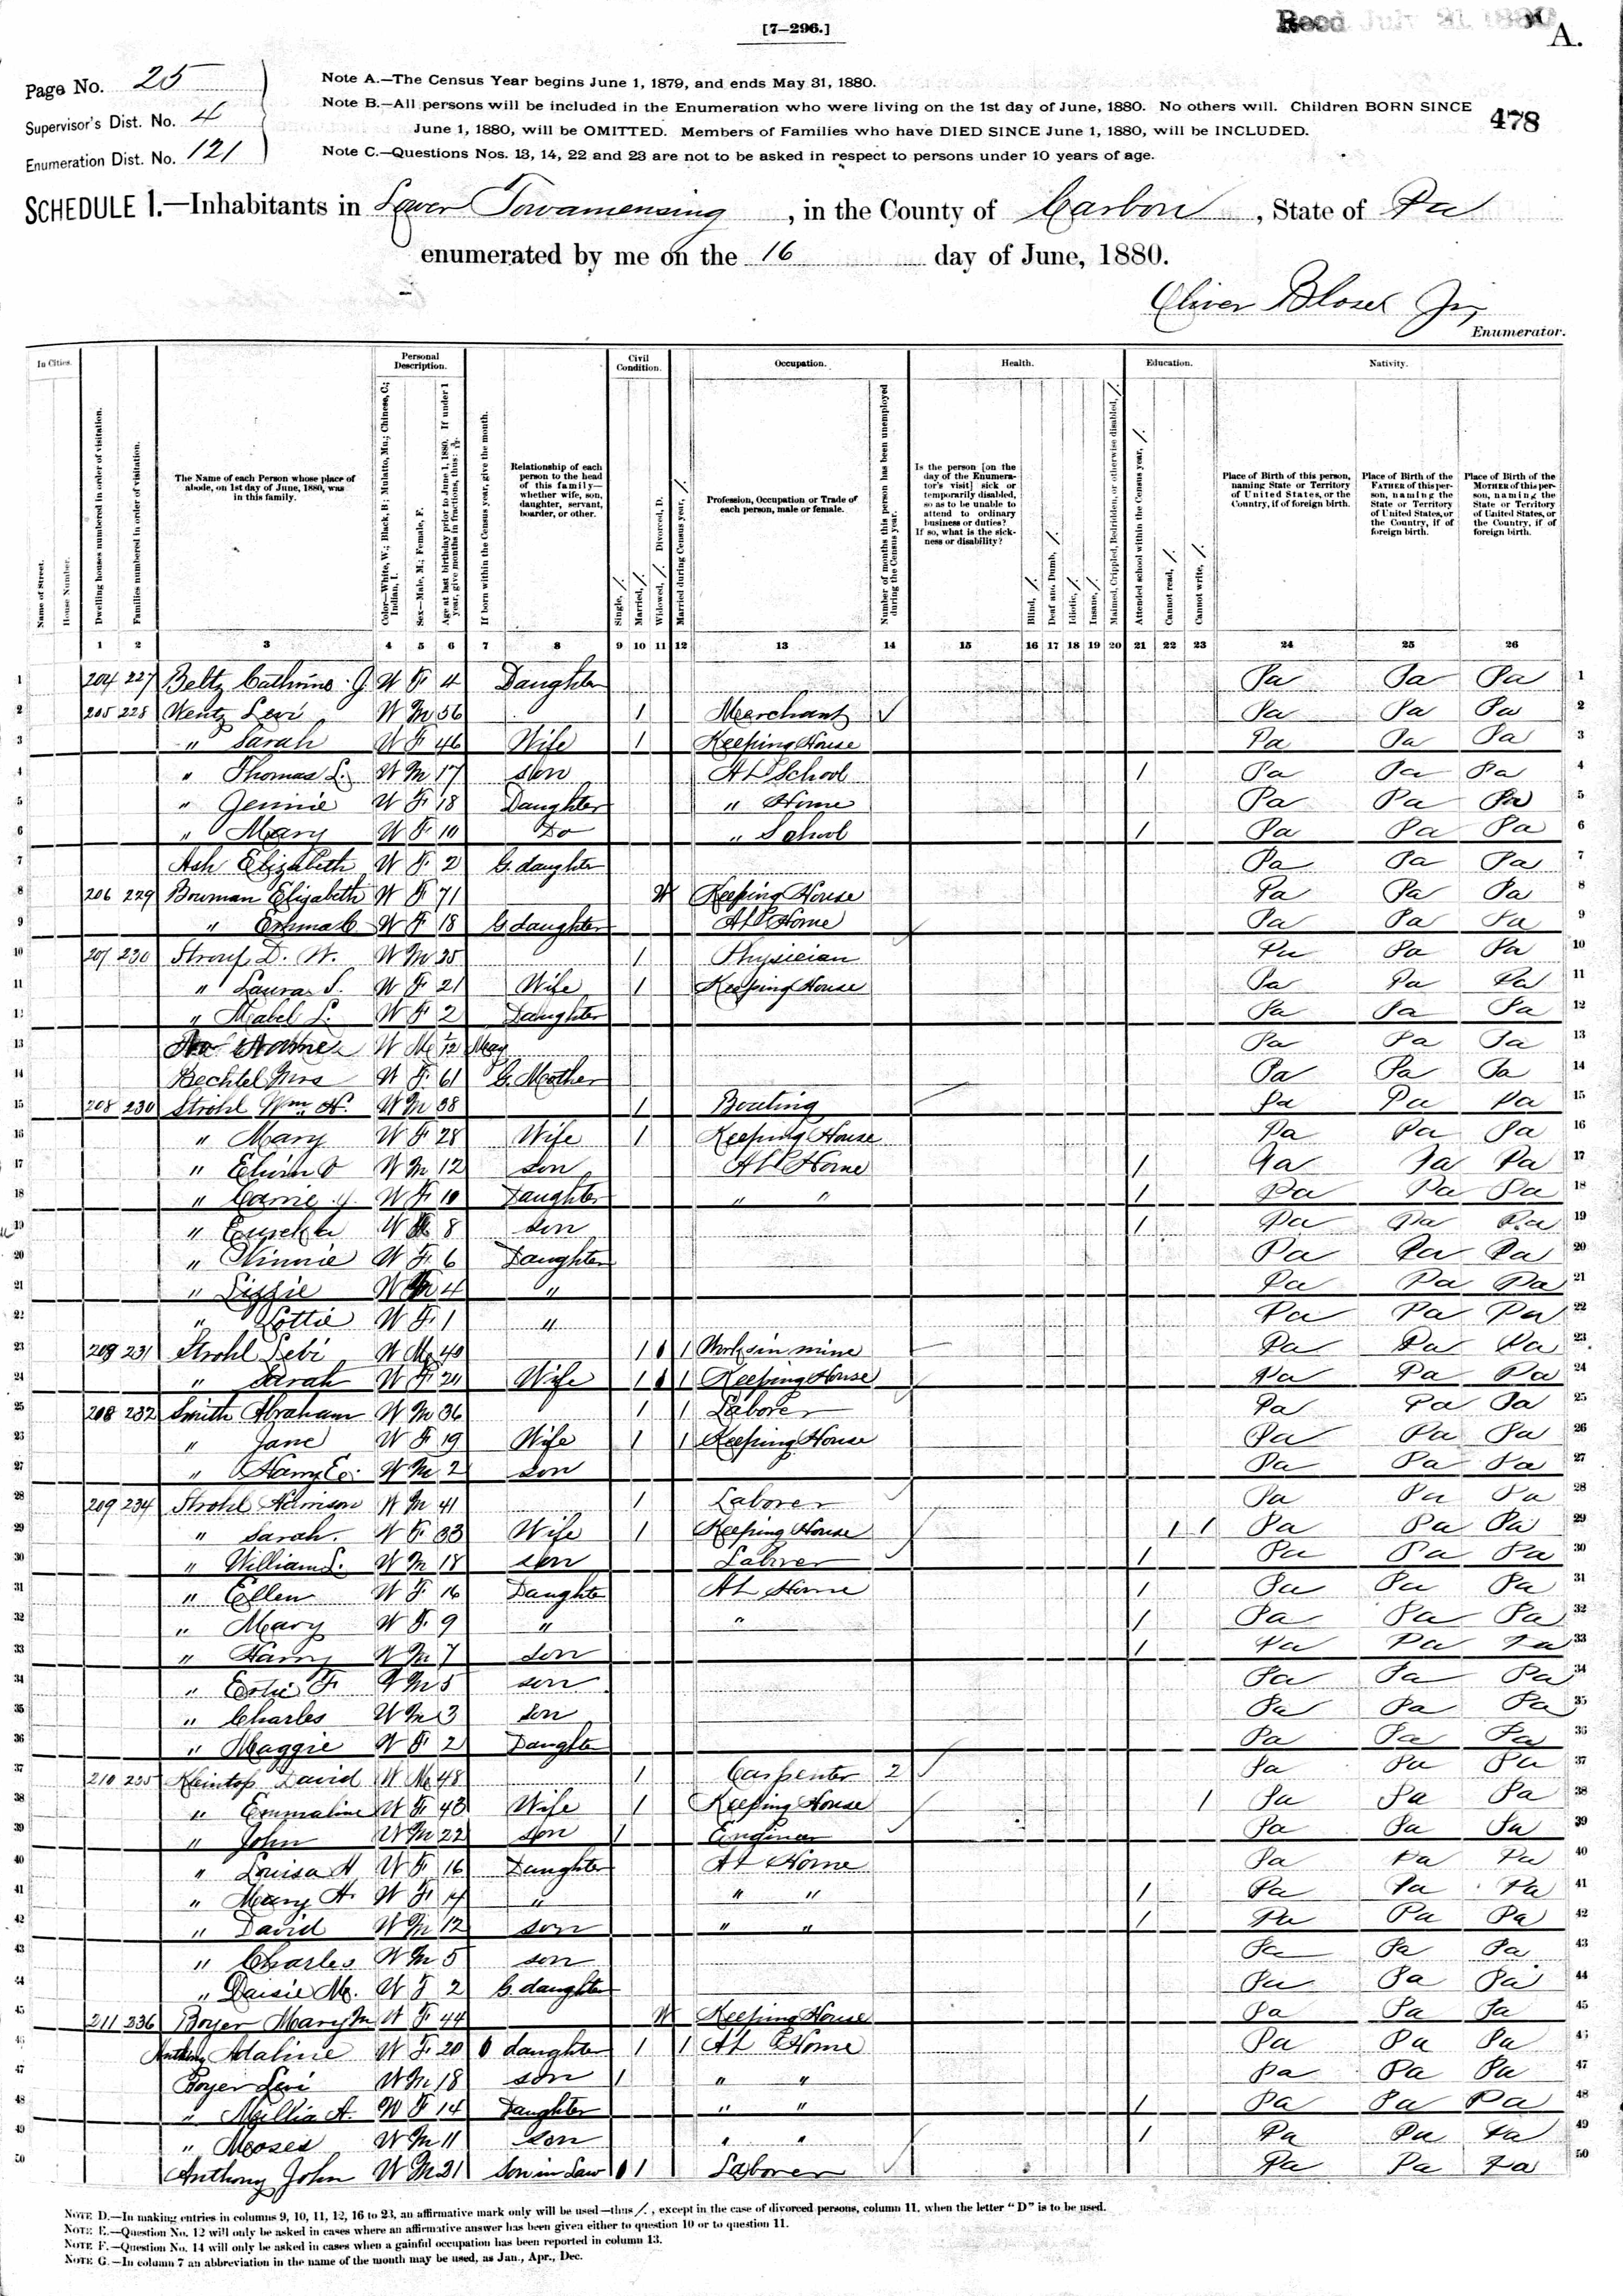 1880 United States Federal Census - David Walter Straub, Laura Sherisky LaBar, Mabel Straub